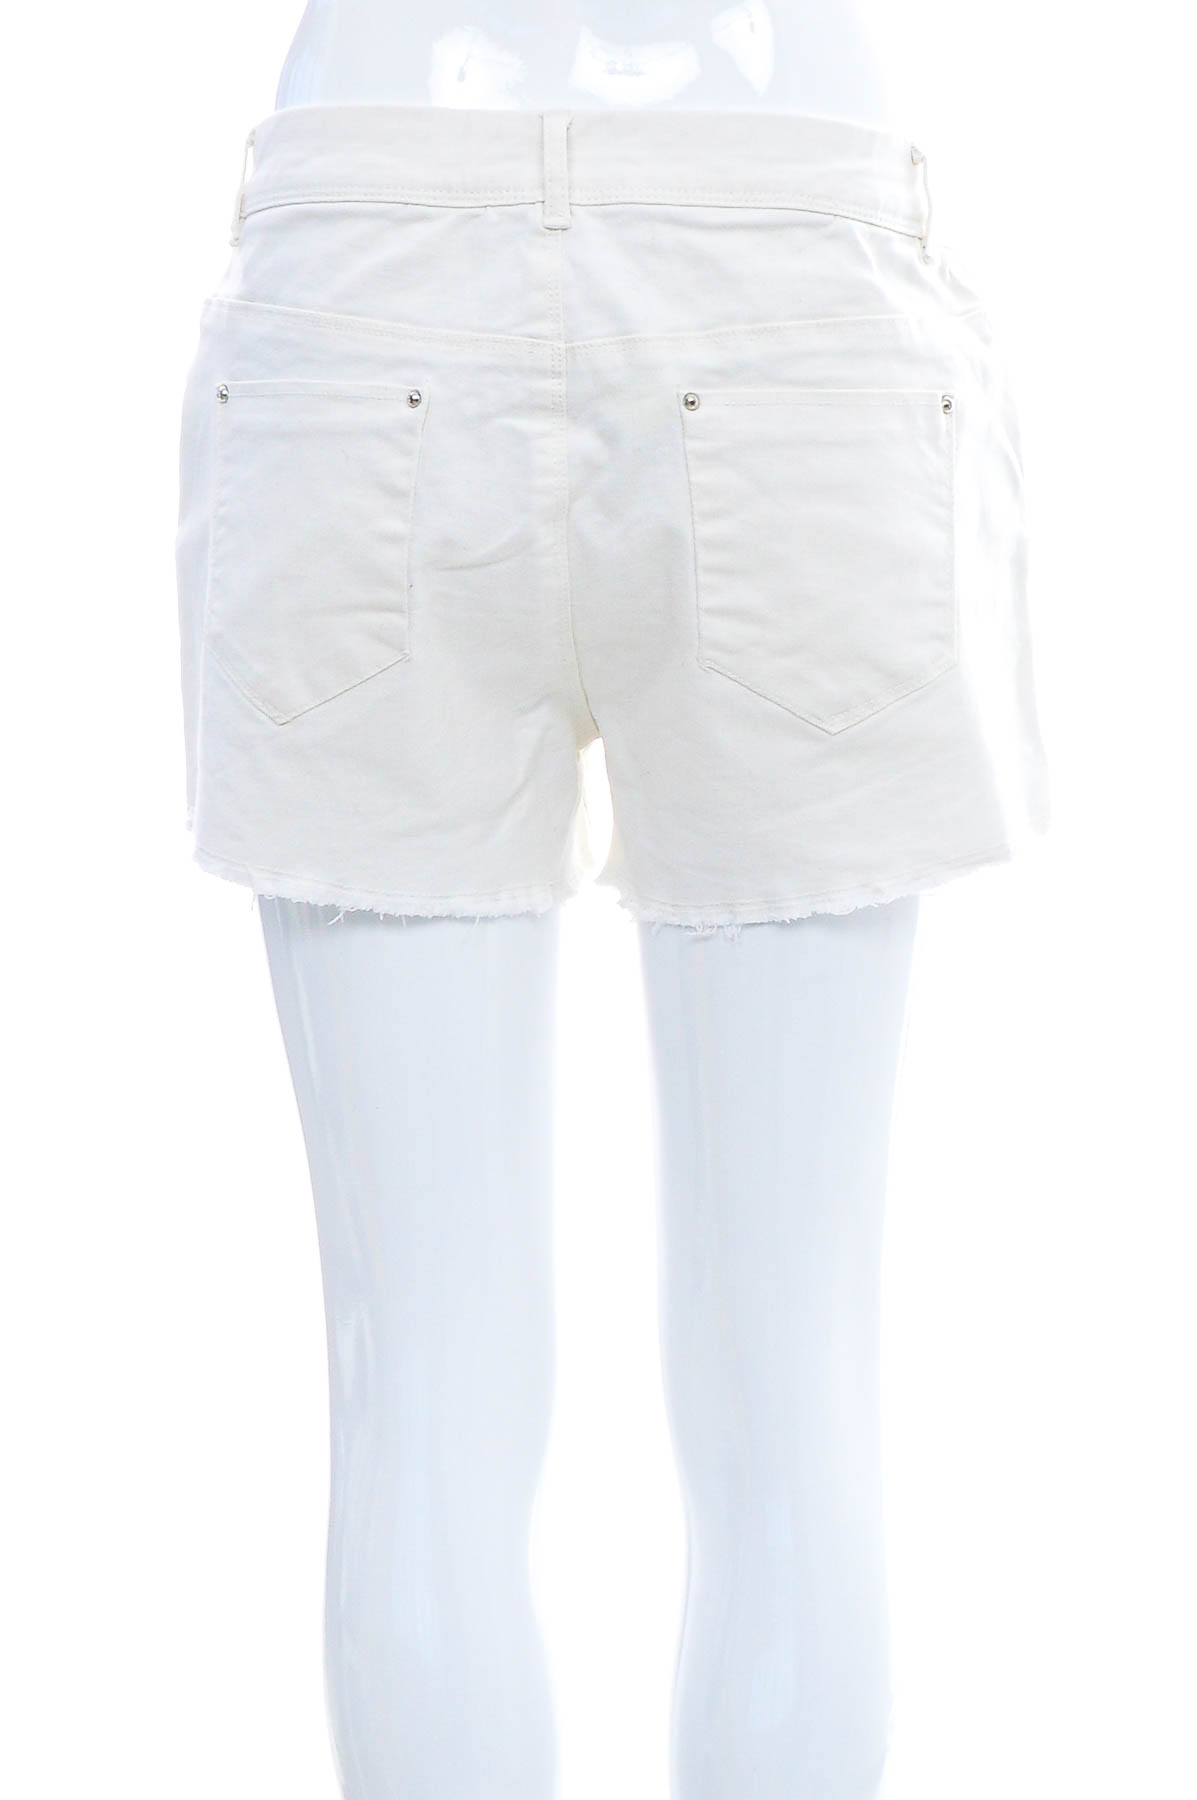 Female shorts - Springfield - 1